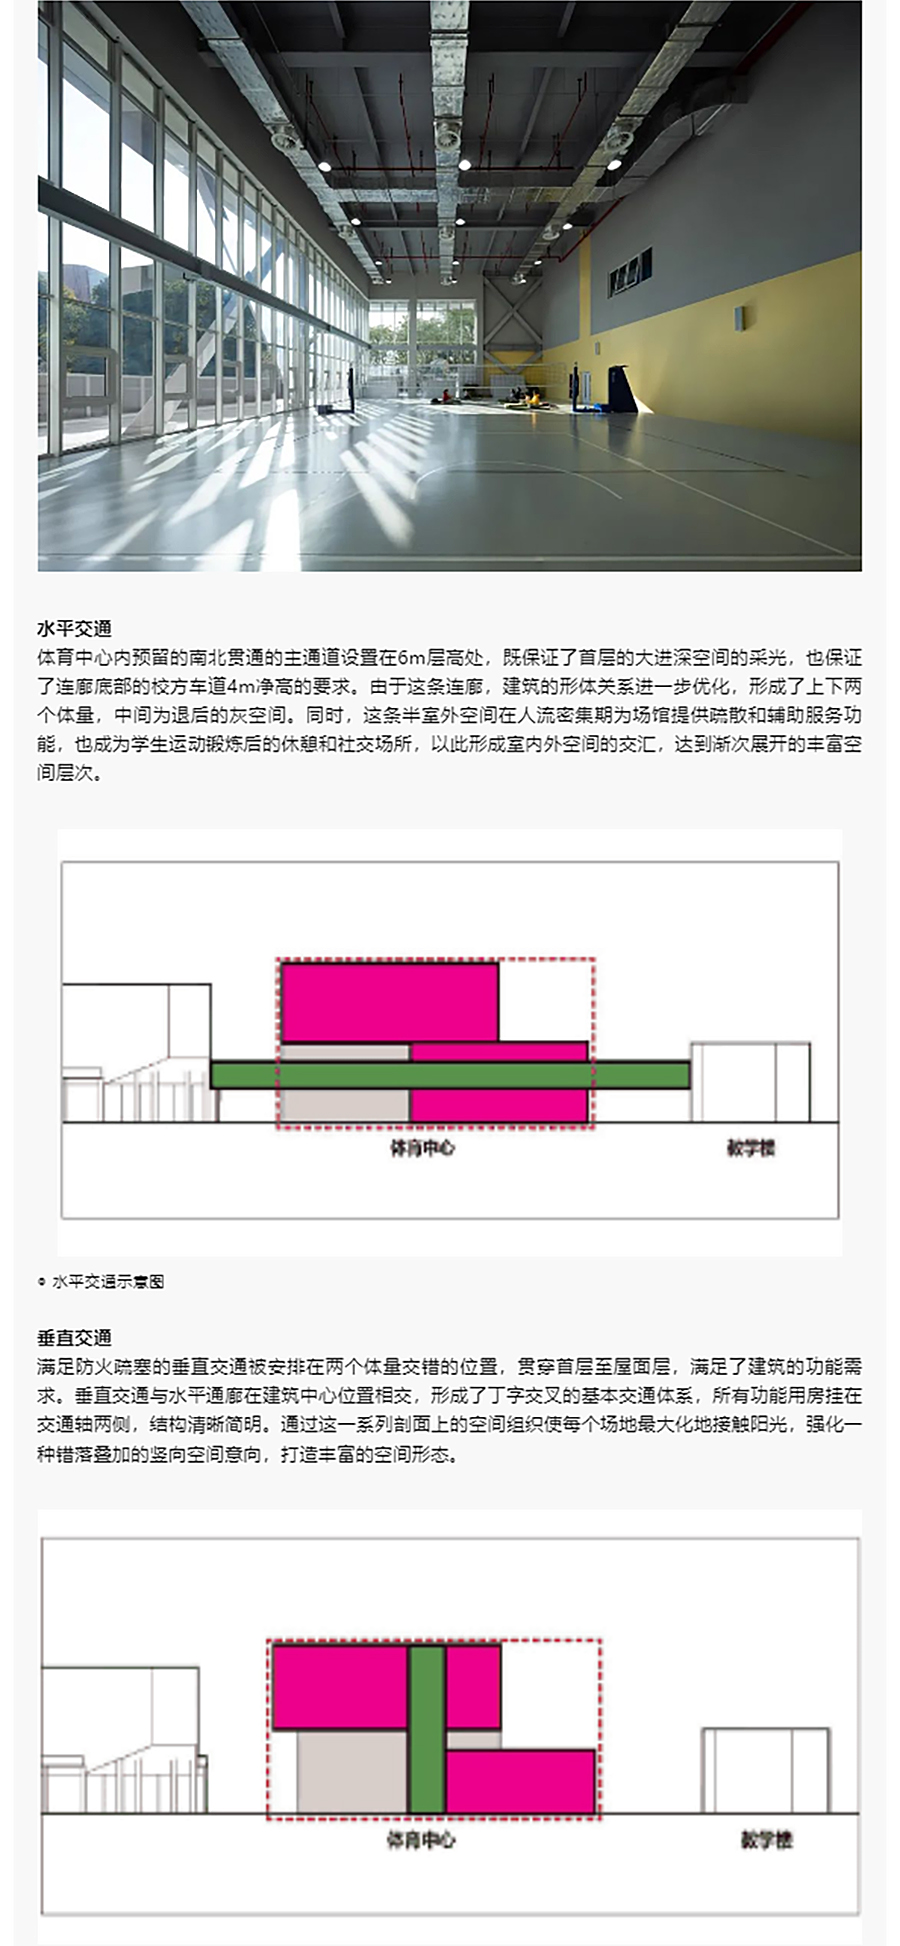 【2022REARD获奖作品赏析】校园建筑-_-上海市实验学校体育中心_0006_图层-7 拷贝.jpg